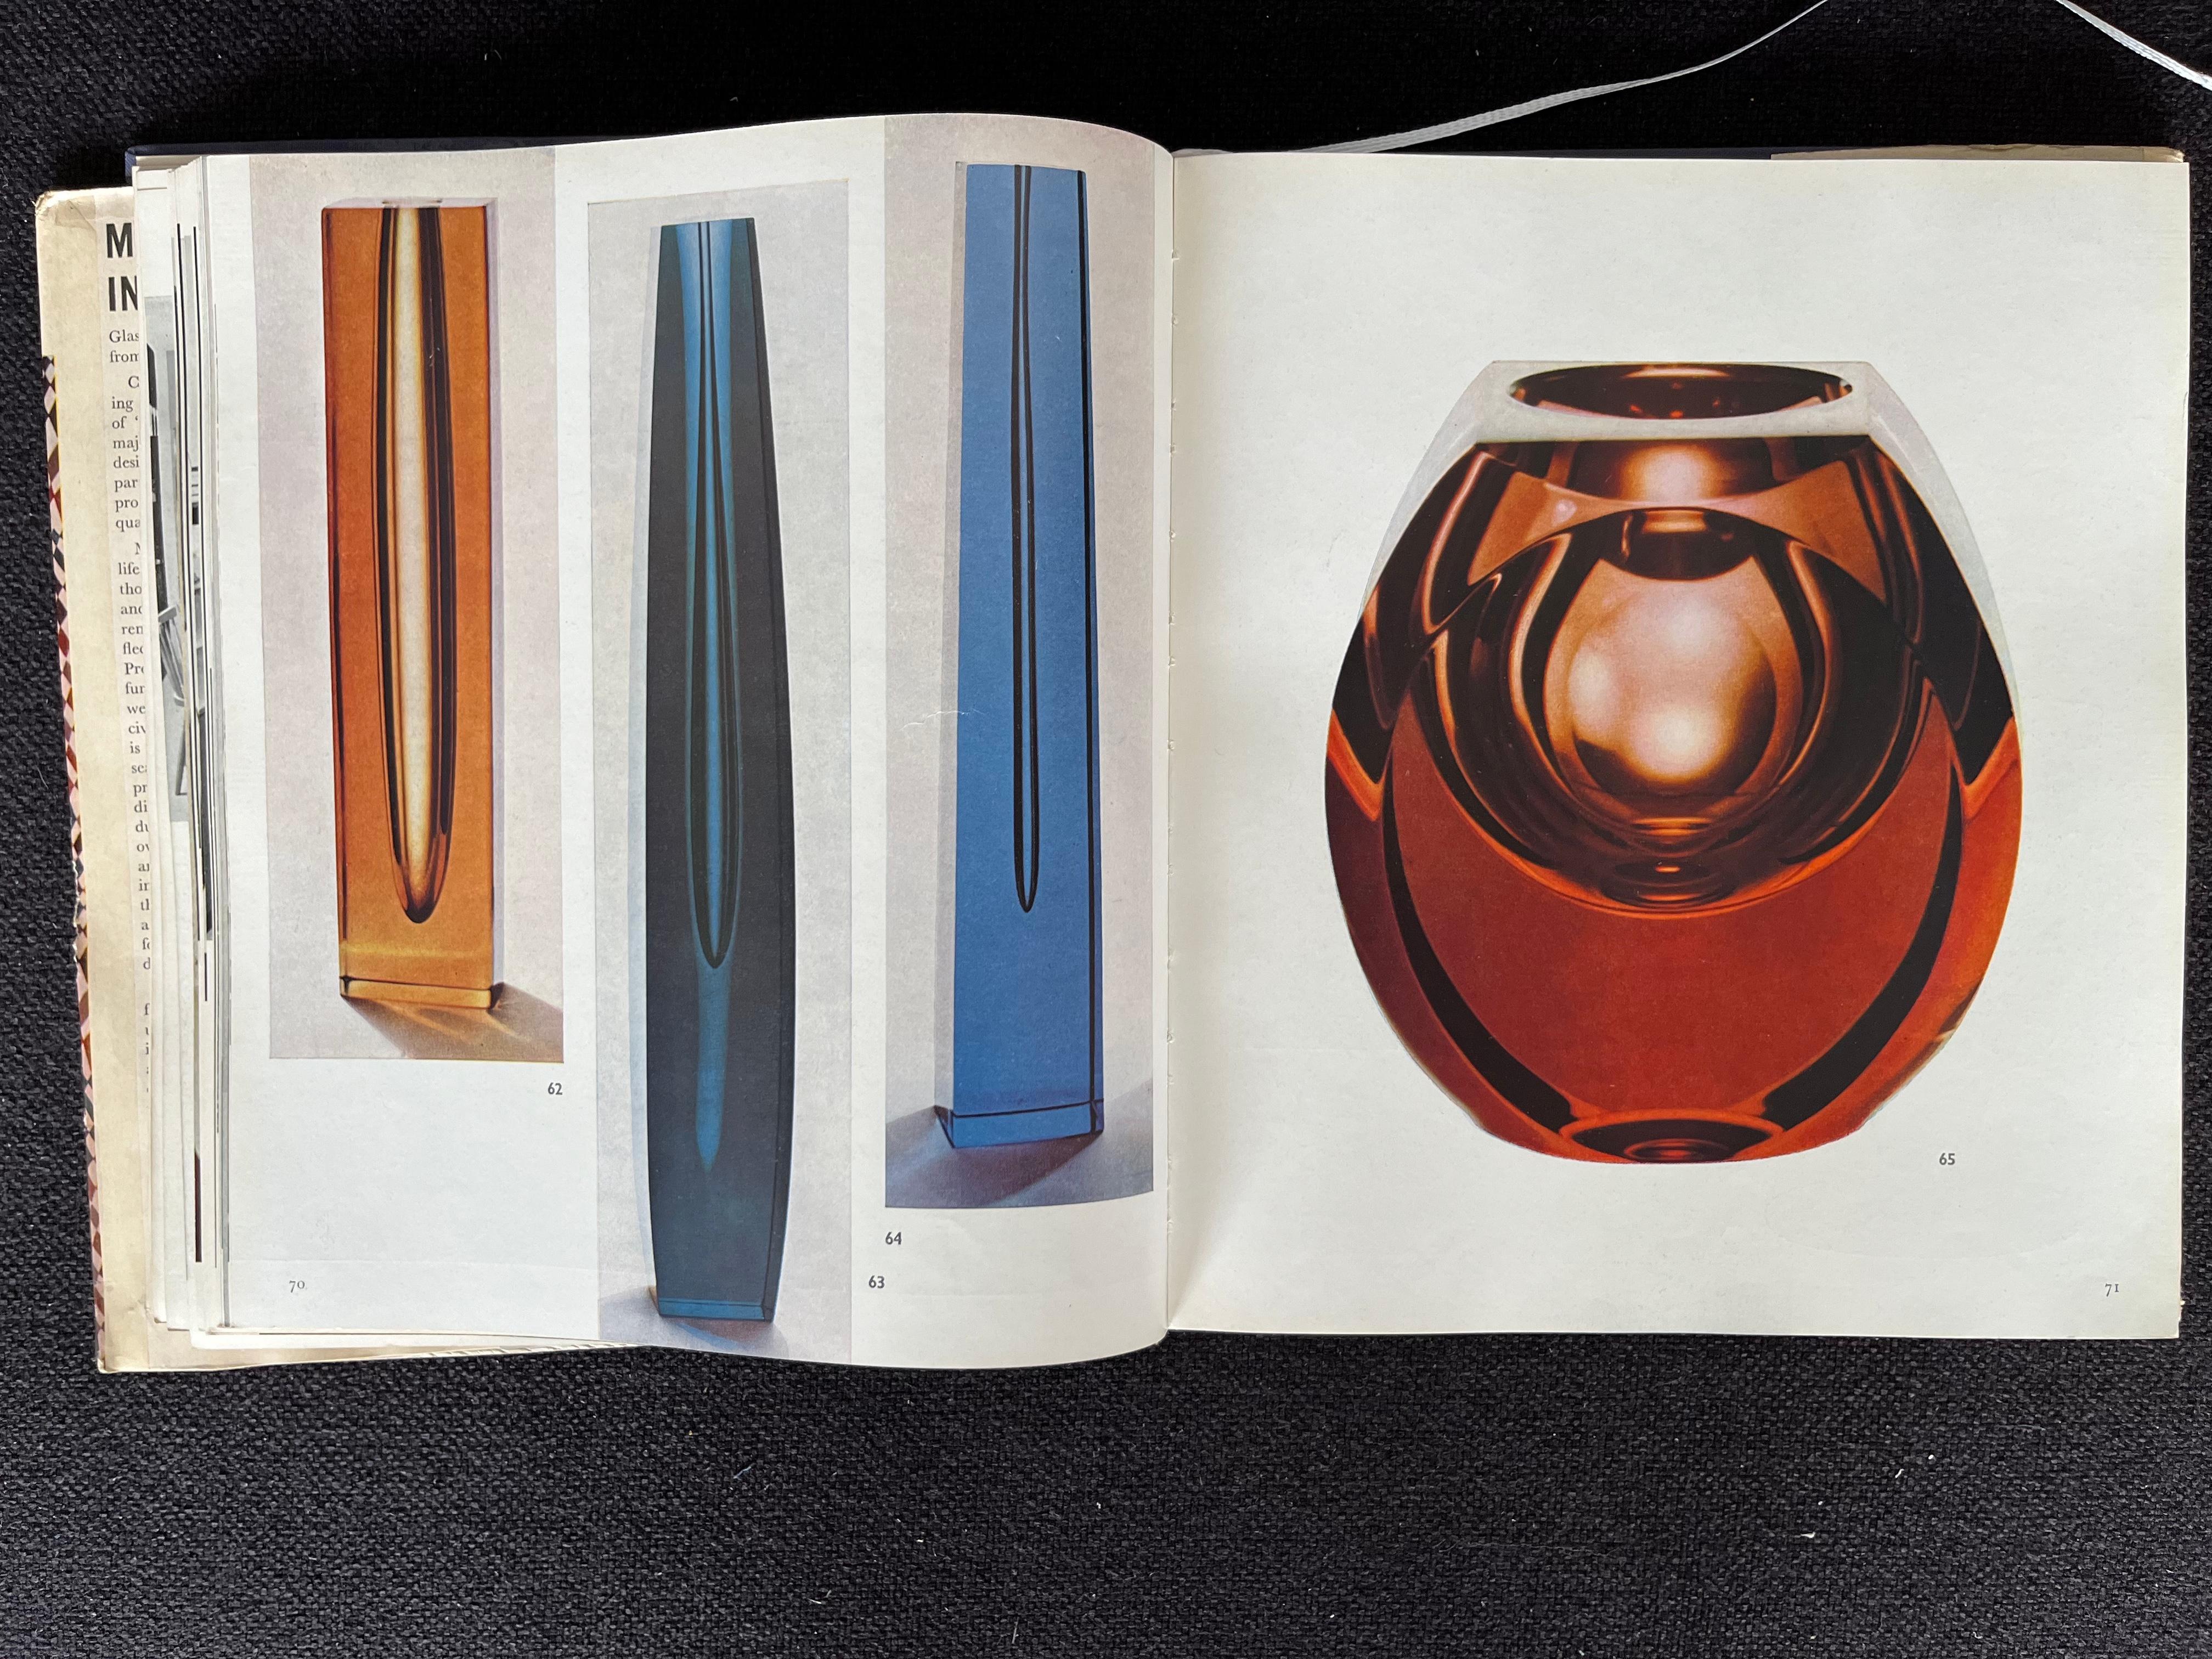 - 1965
- designer : Miroslav Rada
- Artia Praha
- Version anglaise
- état original, voir les photos
- 207 pages
- beaucoup de belles photos
- JR.